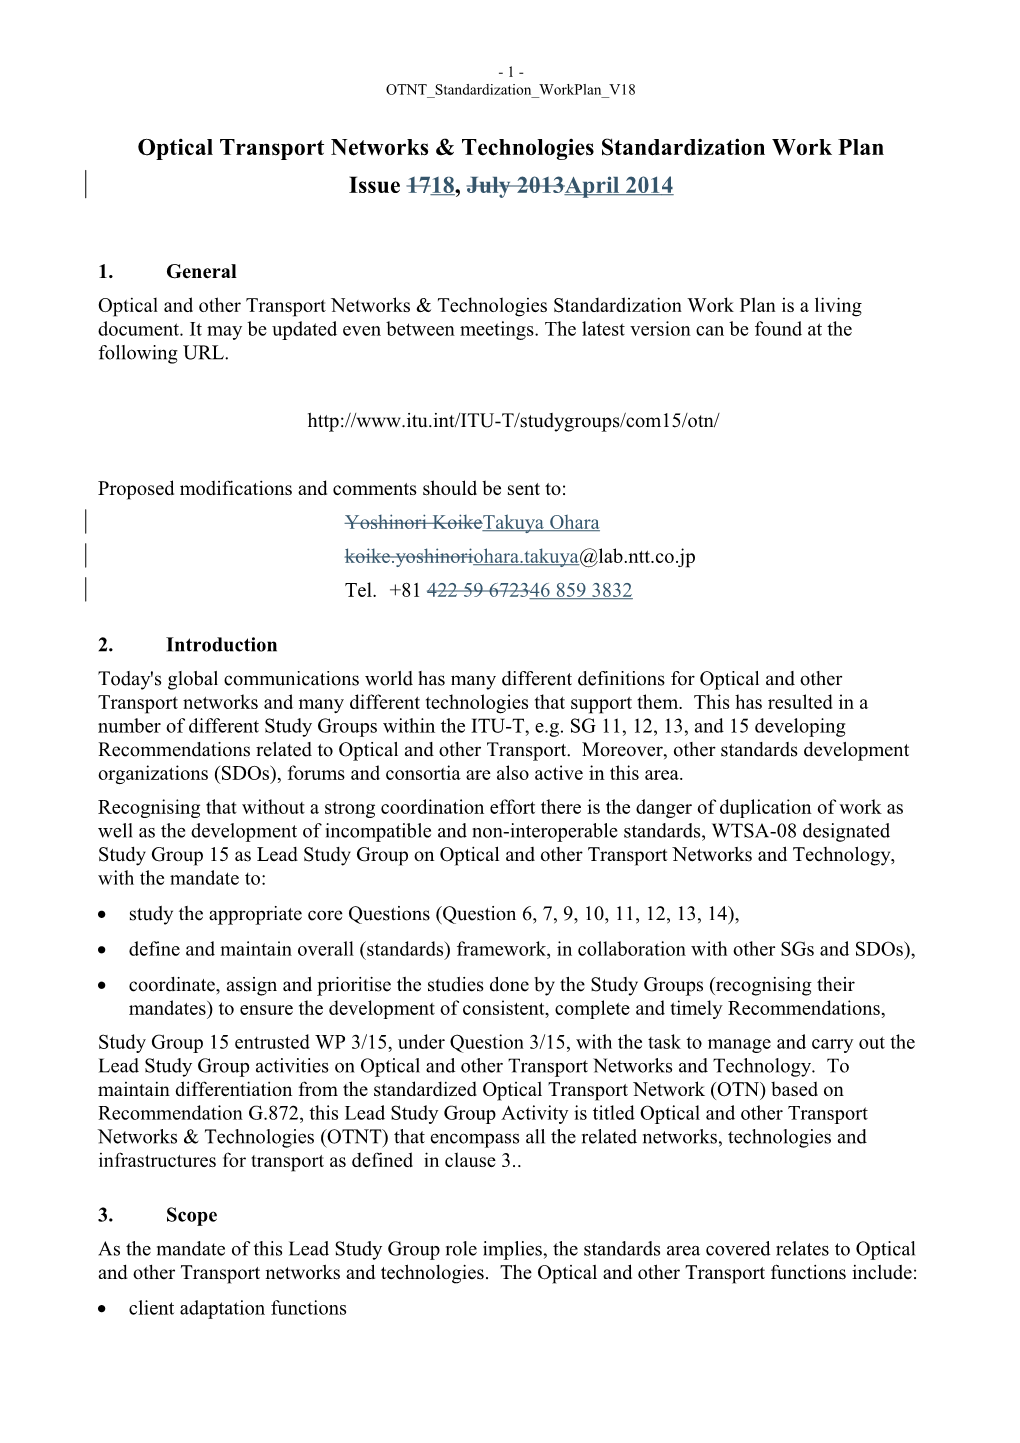 Draft Revised Optical Transport Networks & Technologies Standardization Work Plan, Issue 16